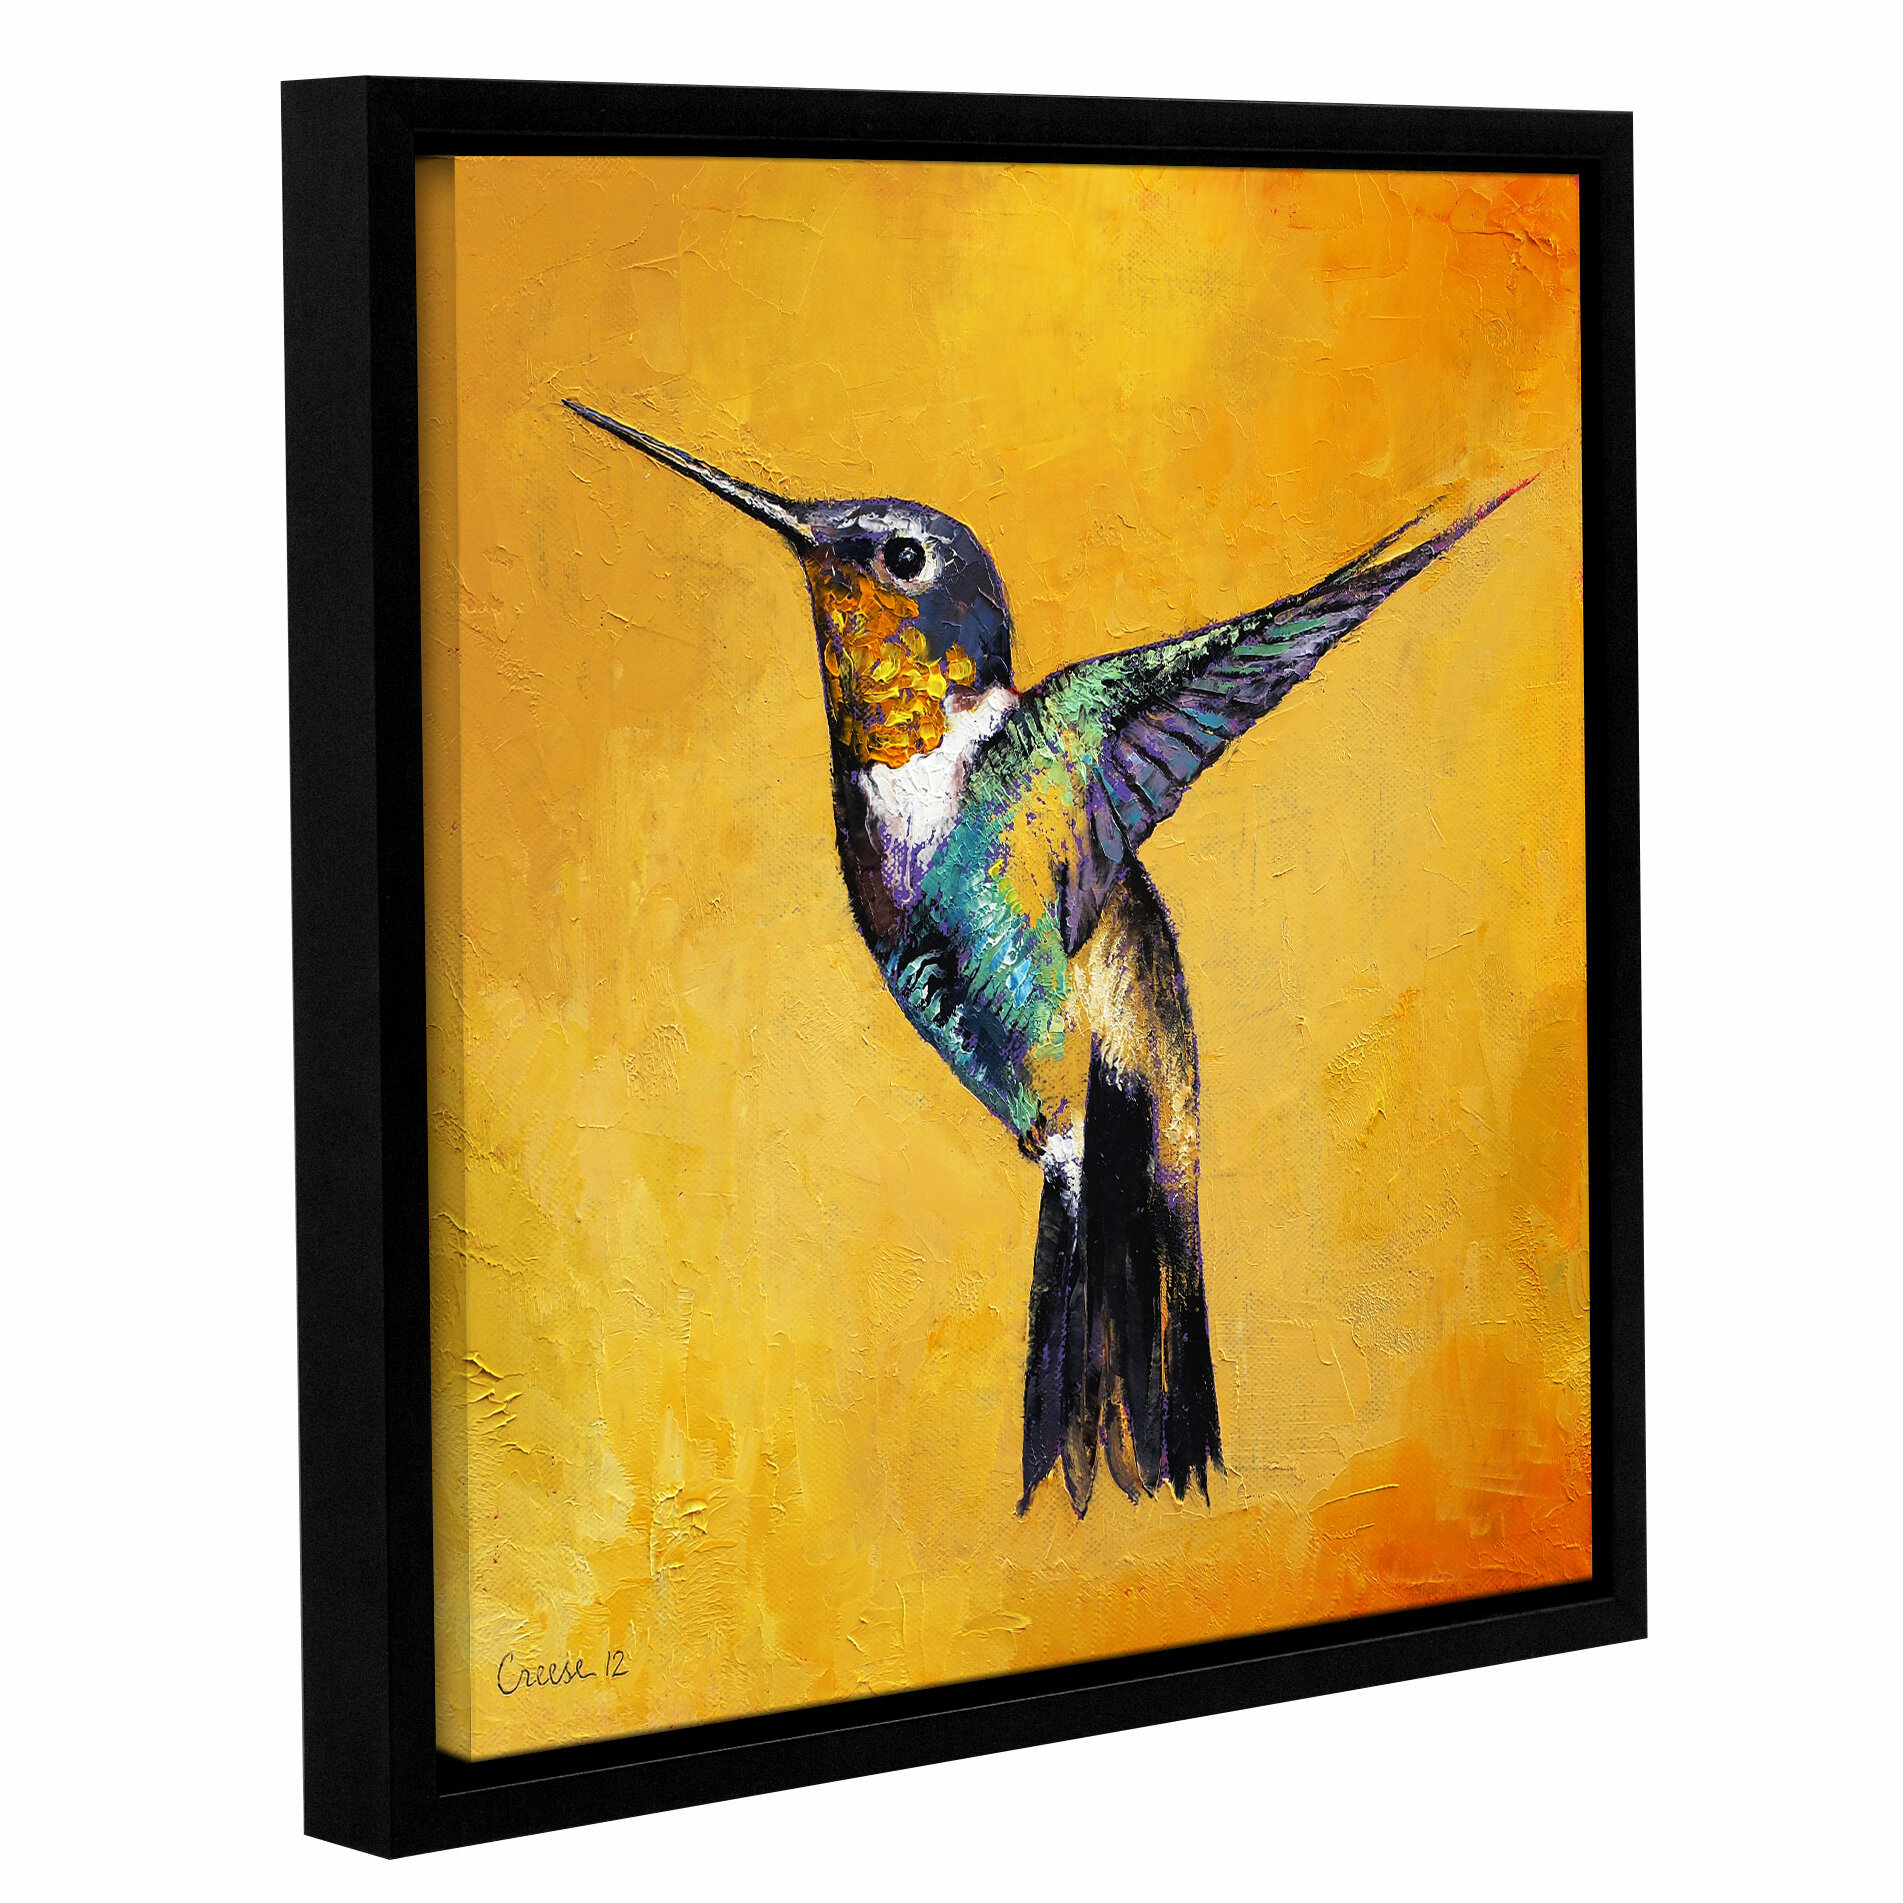 Humming Bird Animal canvas print framed photo picture wall artwork anim118 